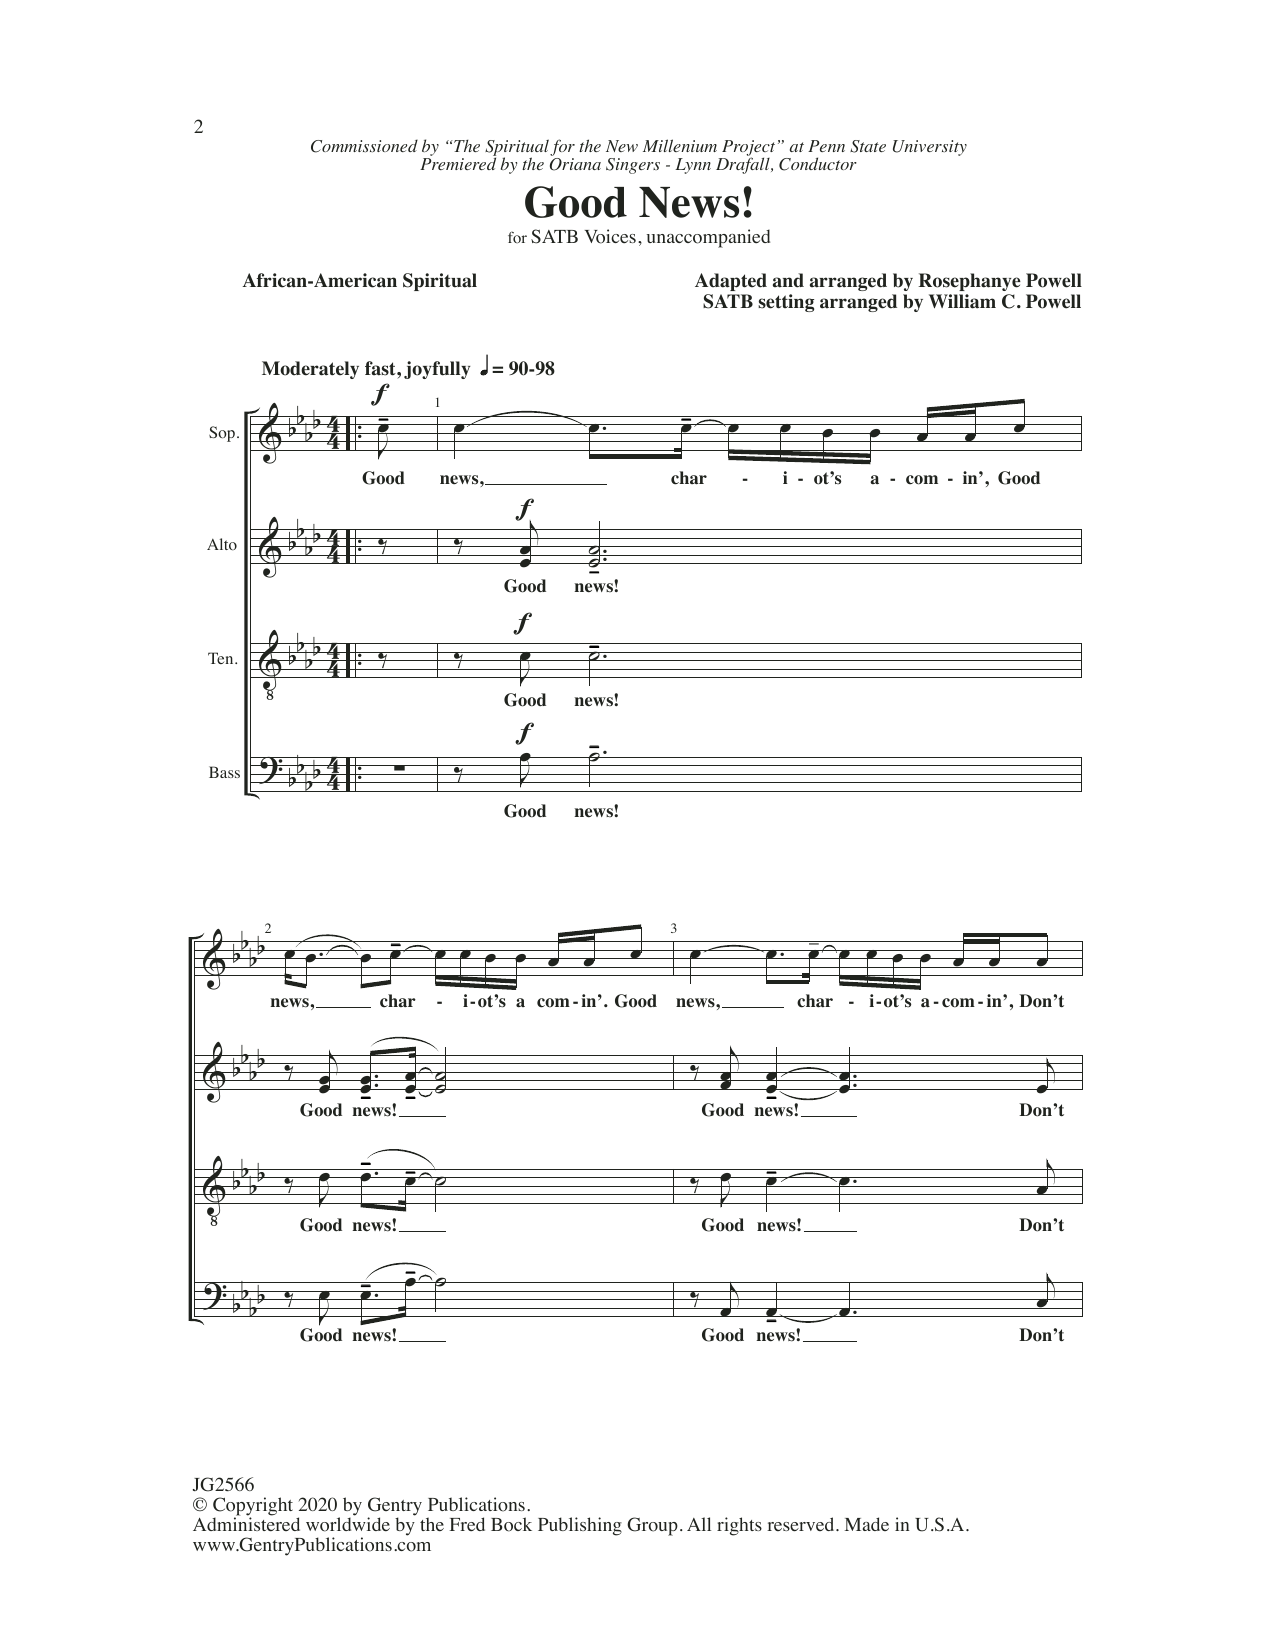 Rosephanye & William C. Powell Good News Sheet Music Notes & Chords for SATB Choir - Download or Print PDF